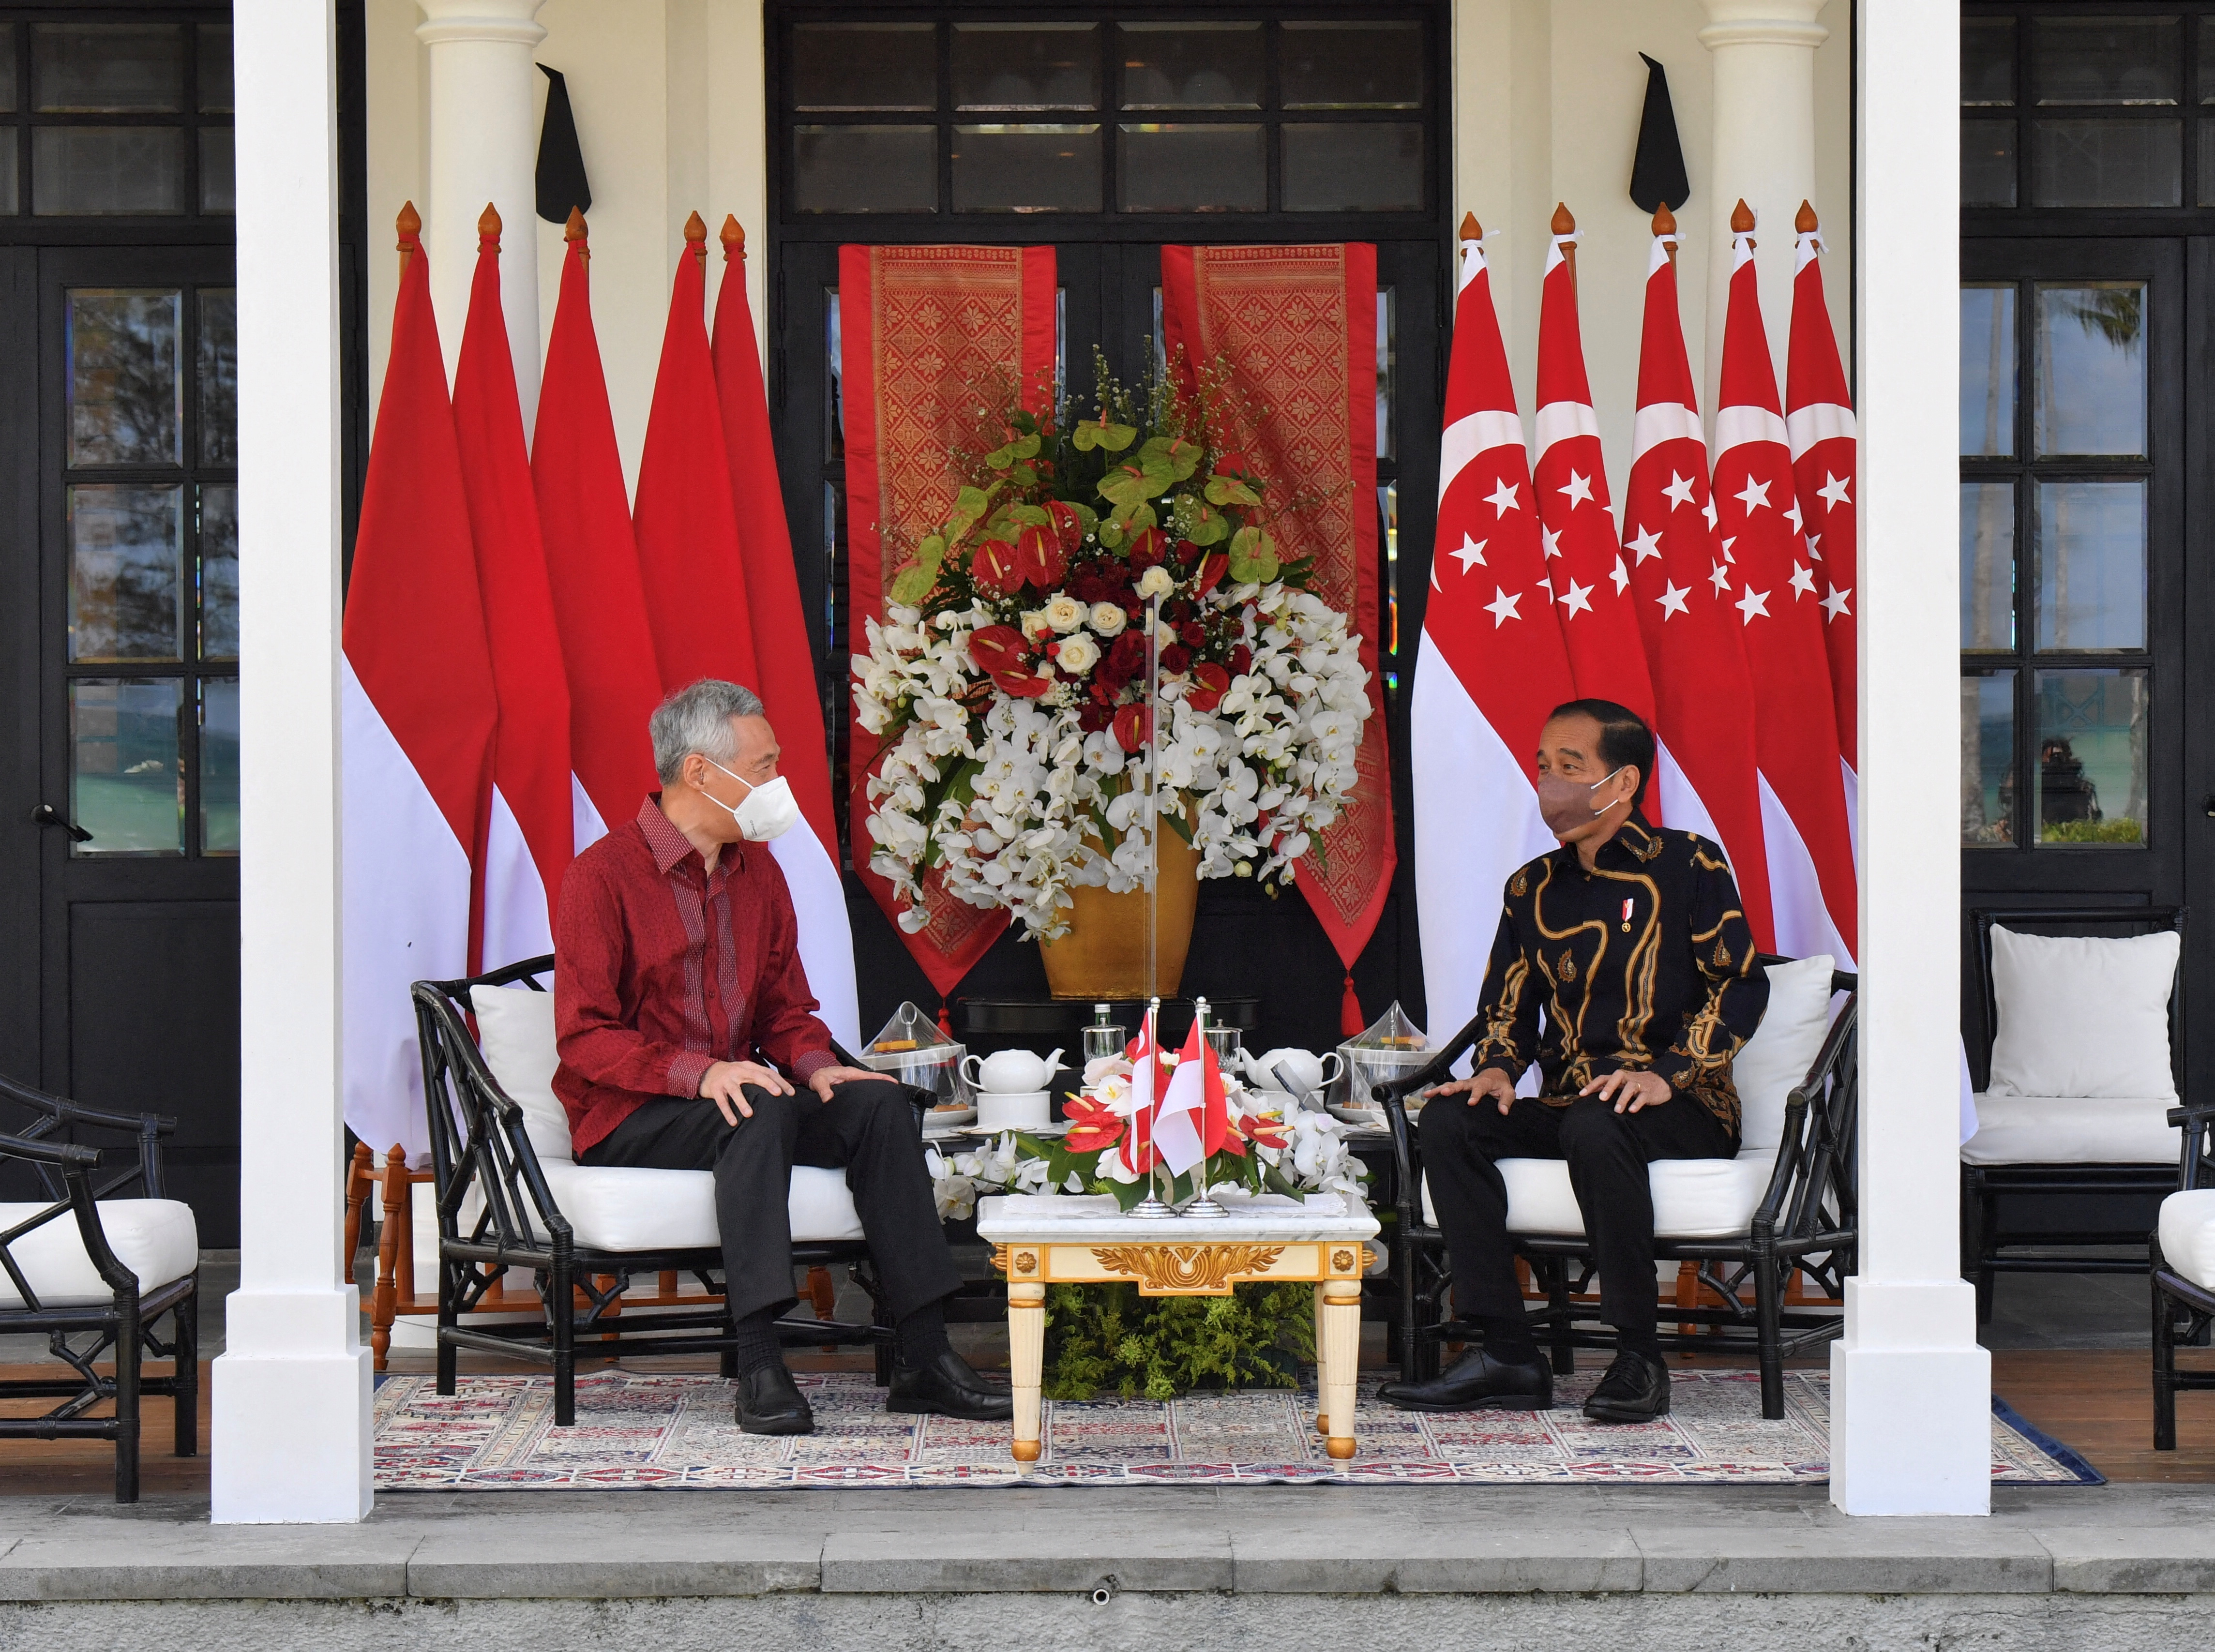 Annual leaders' retreat at the Indonesian island of Bintan in Riau